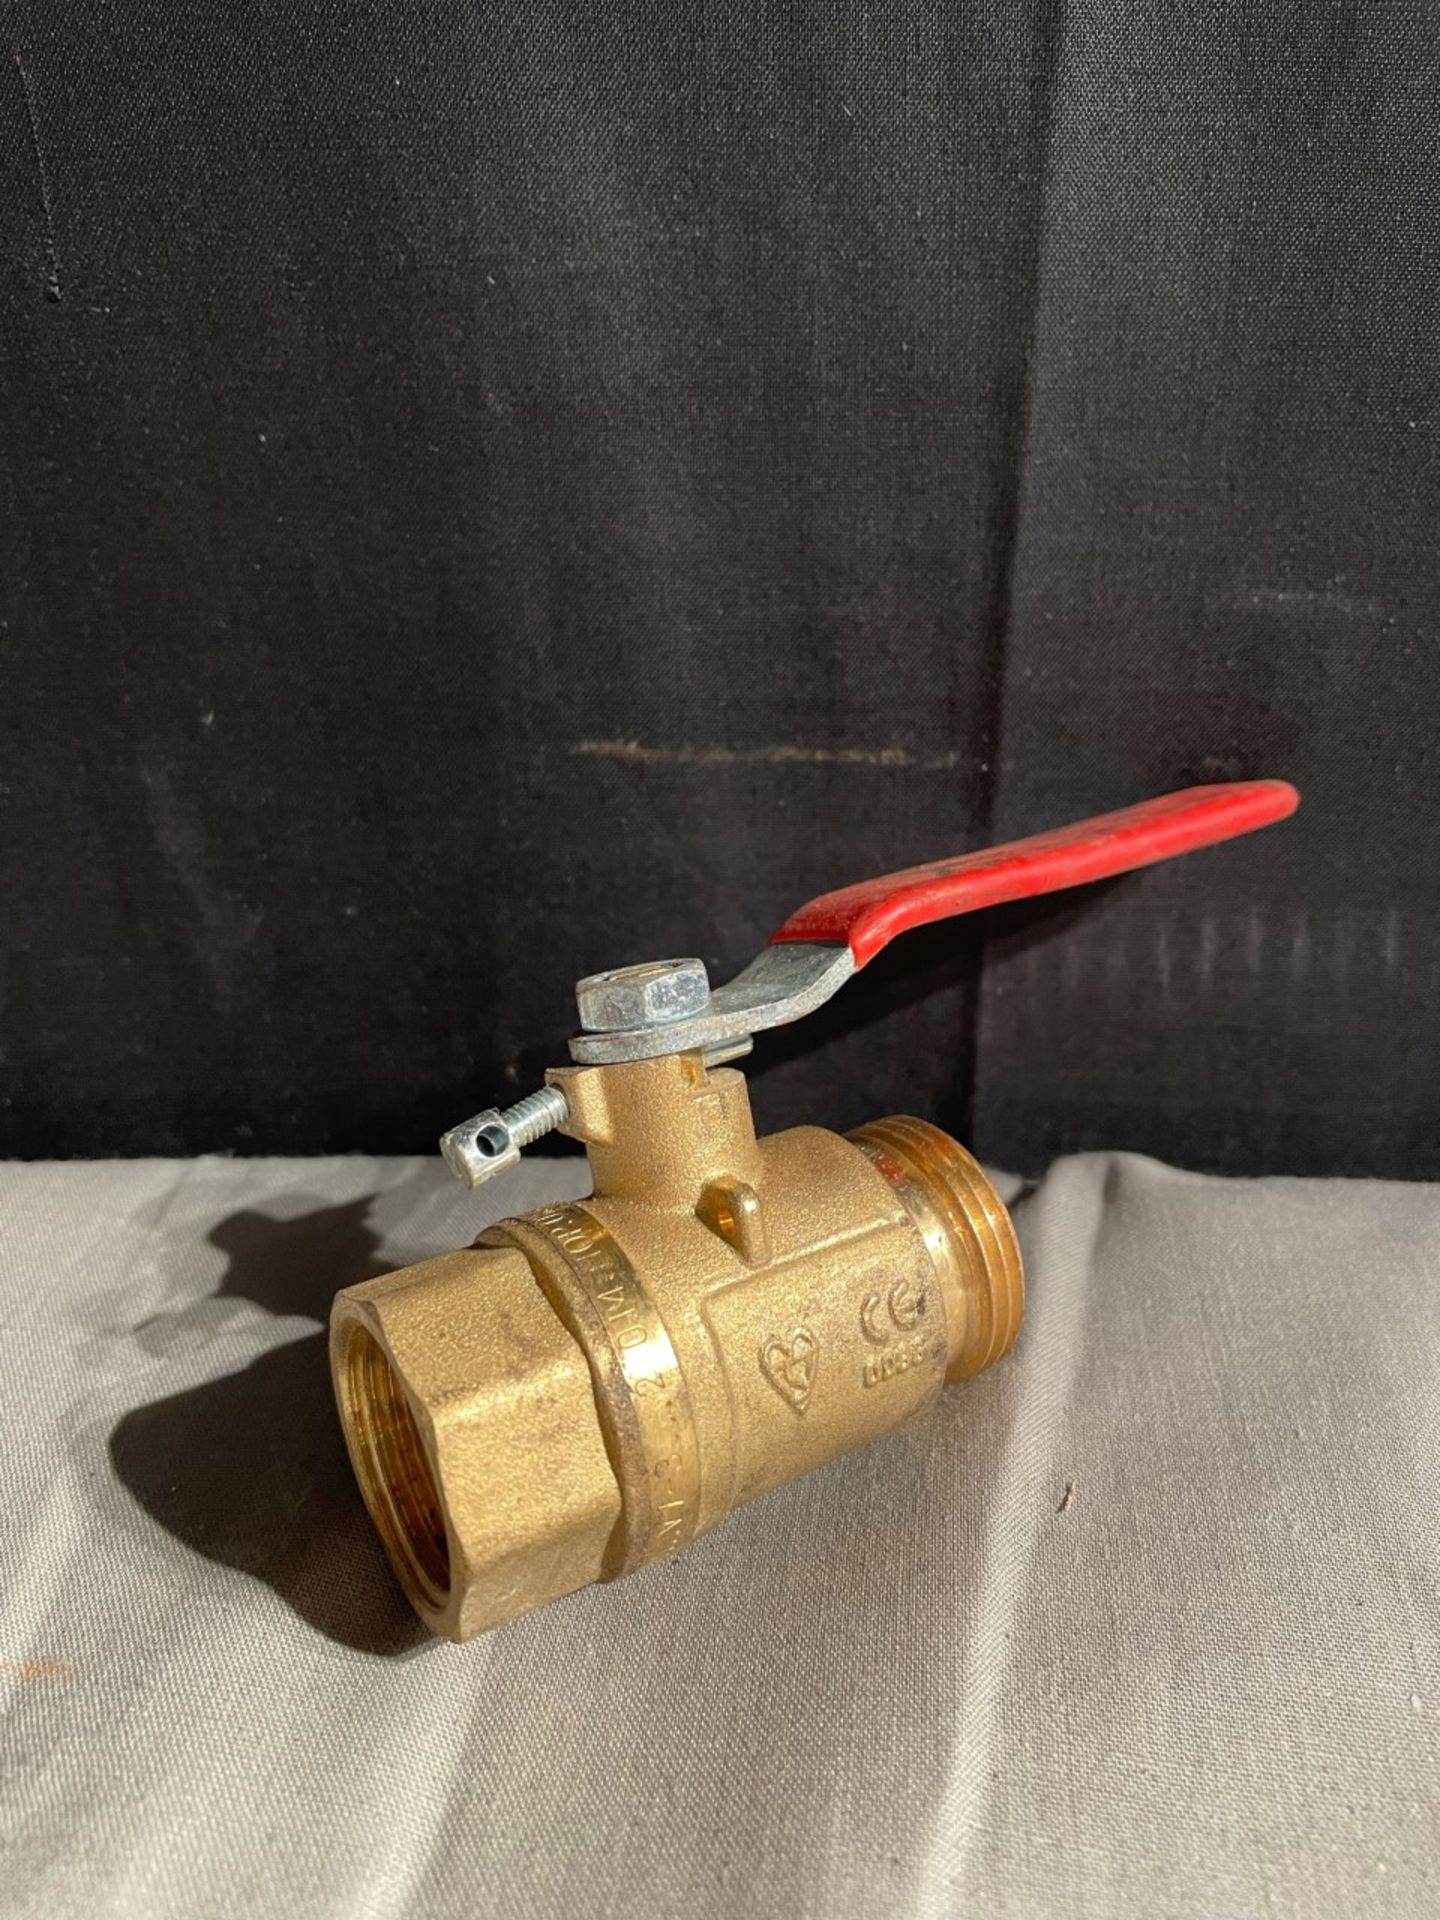 1x new 3/4” LP Gas emergency control valve